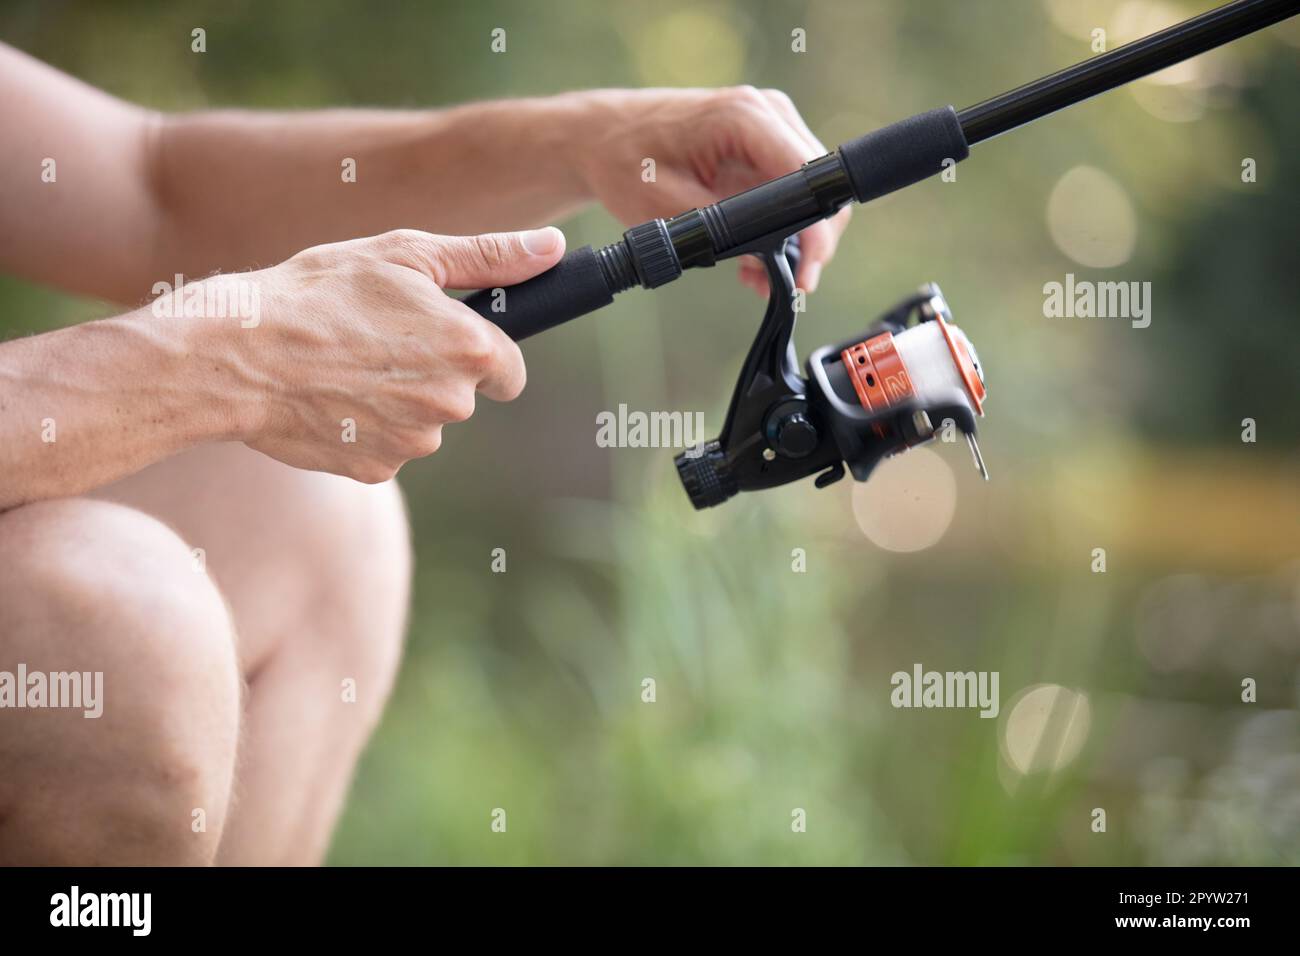 human hand holding fishing rod Stock Photo - Alamy